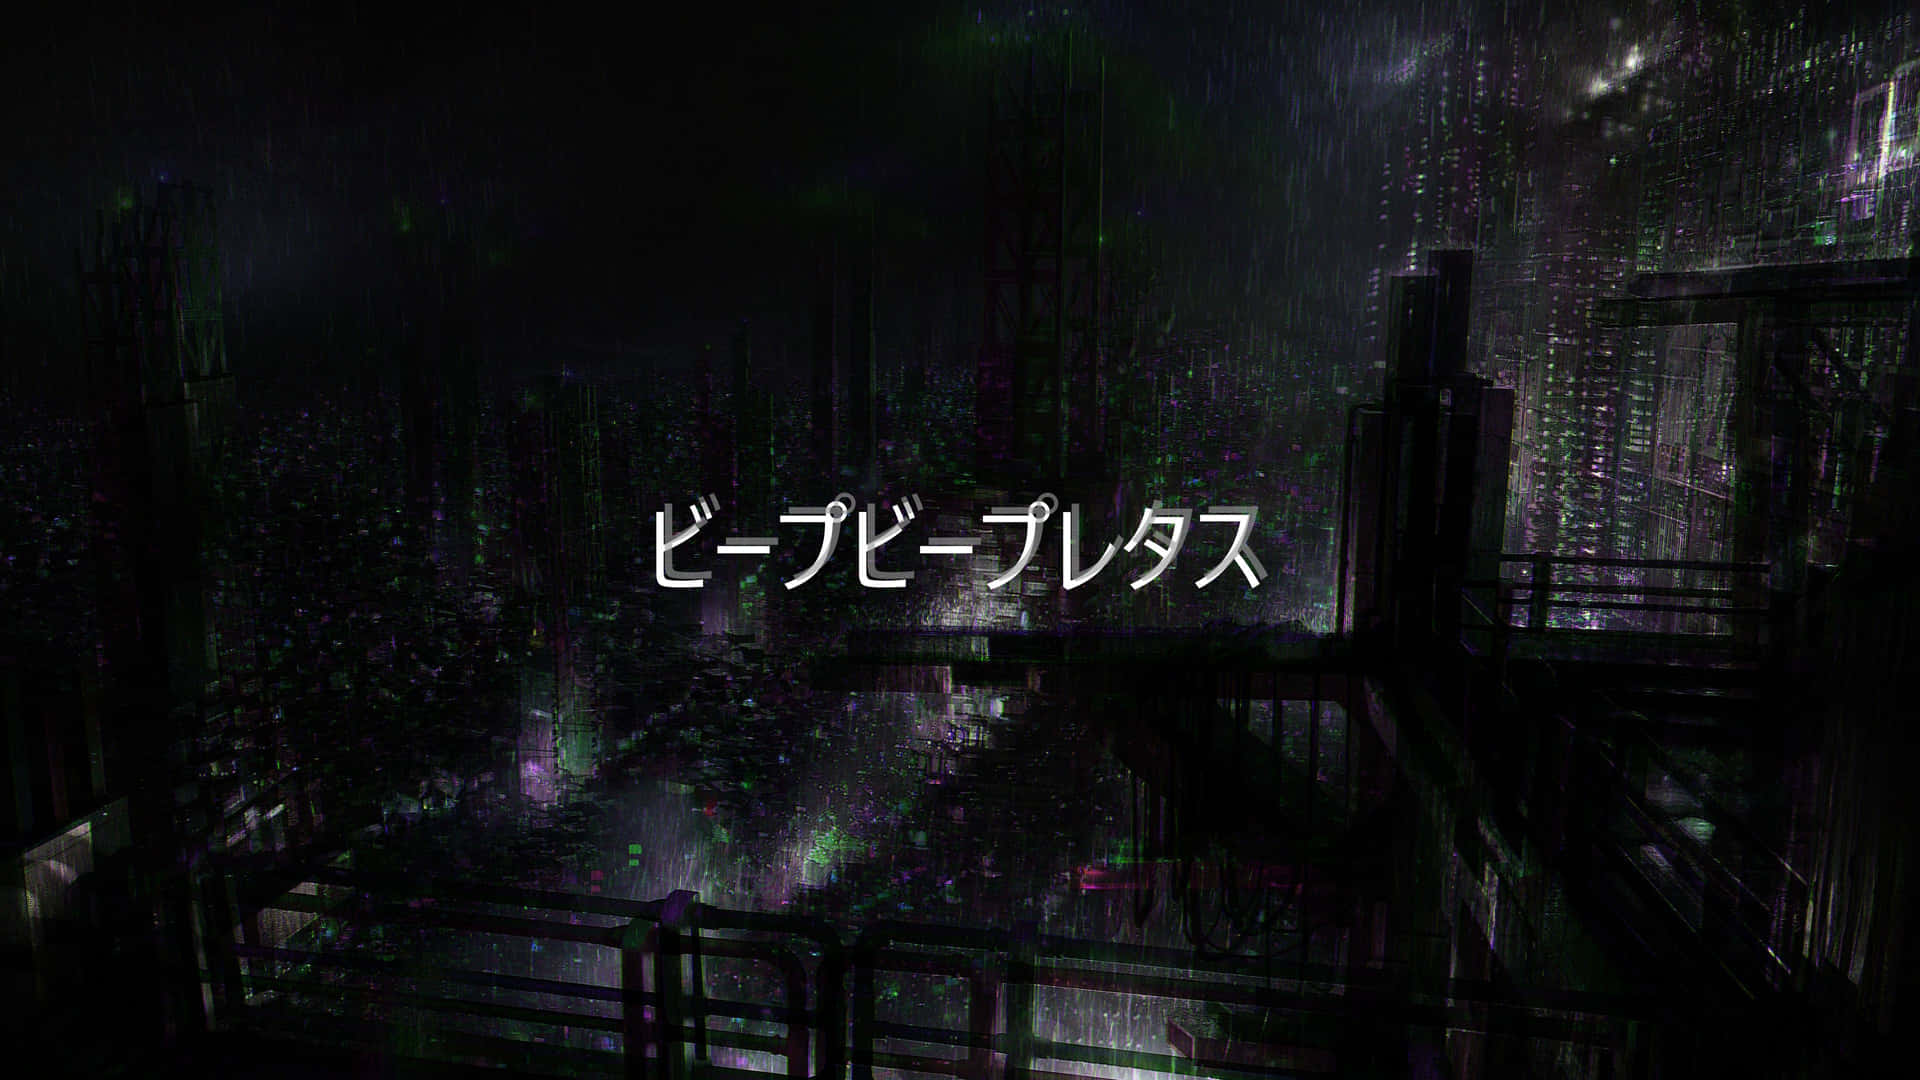 Black Glitchy Anime City Aesthetic Pc Background